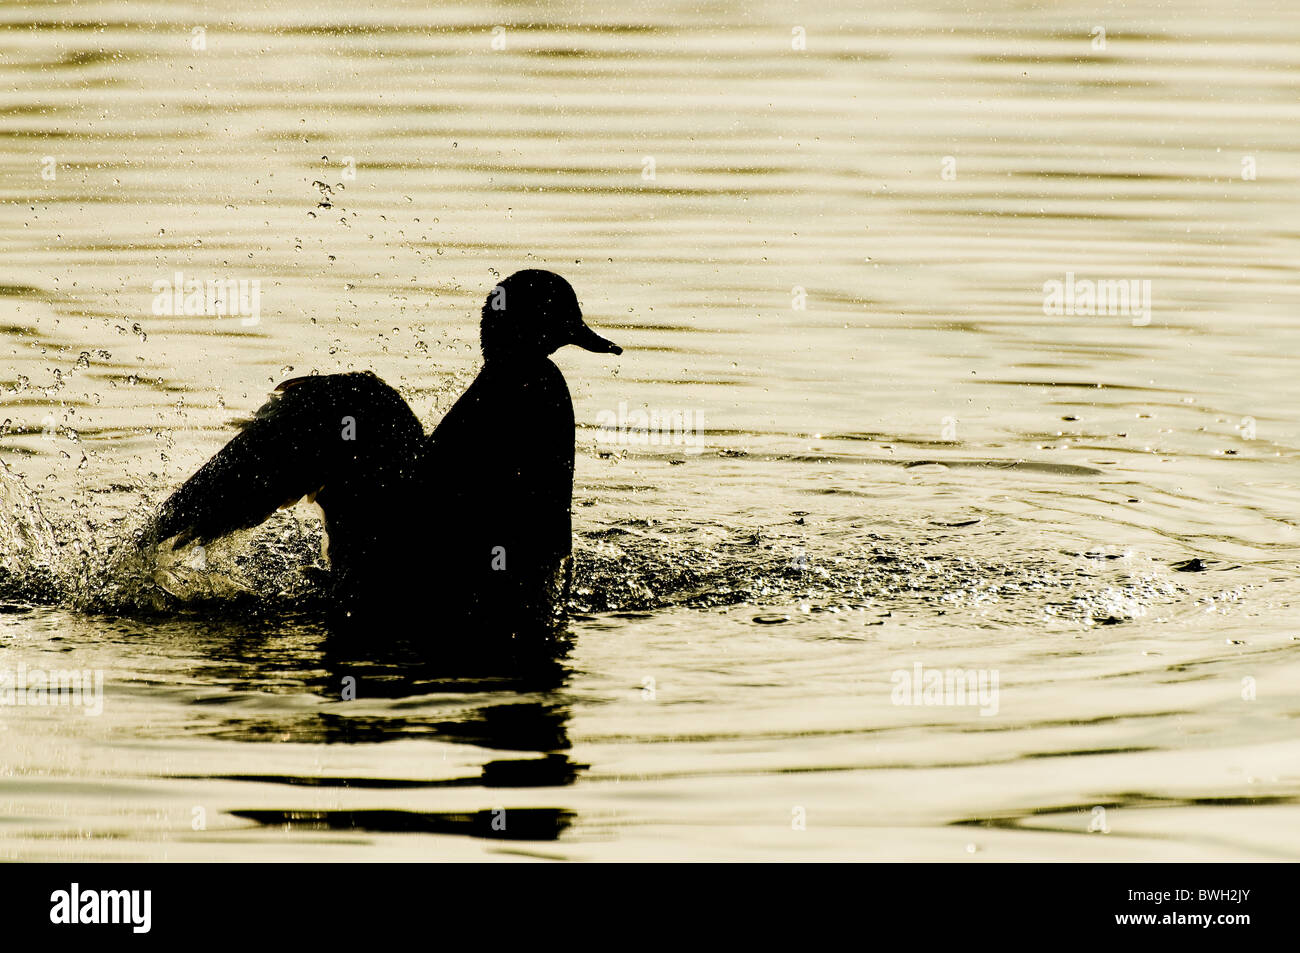 Mallard duck stretching e lavaggio a Thatcham canneti Foto Stock